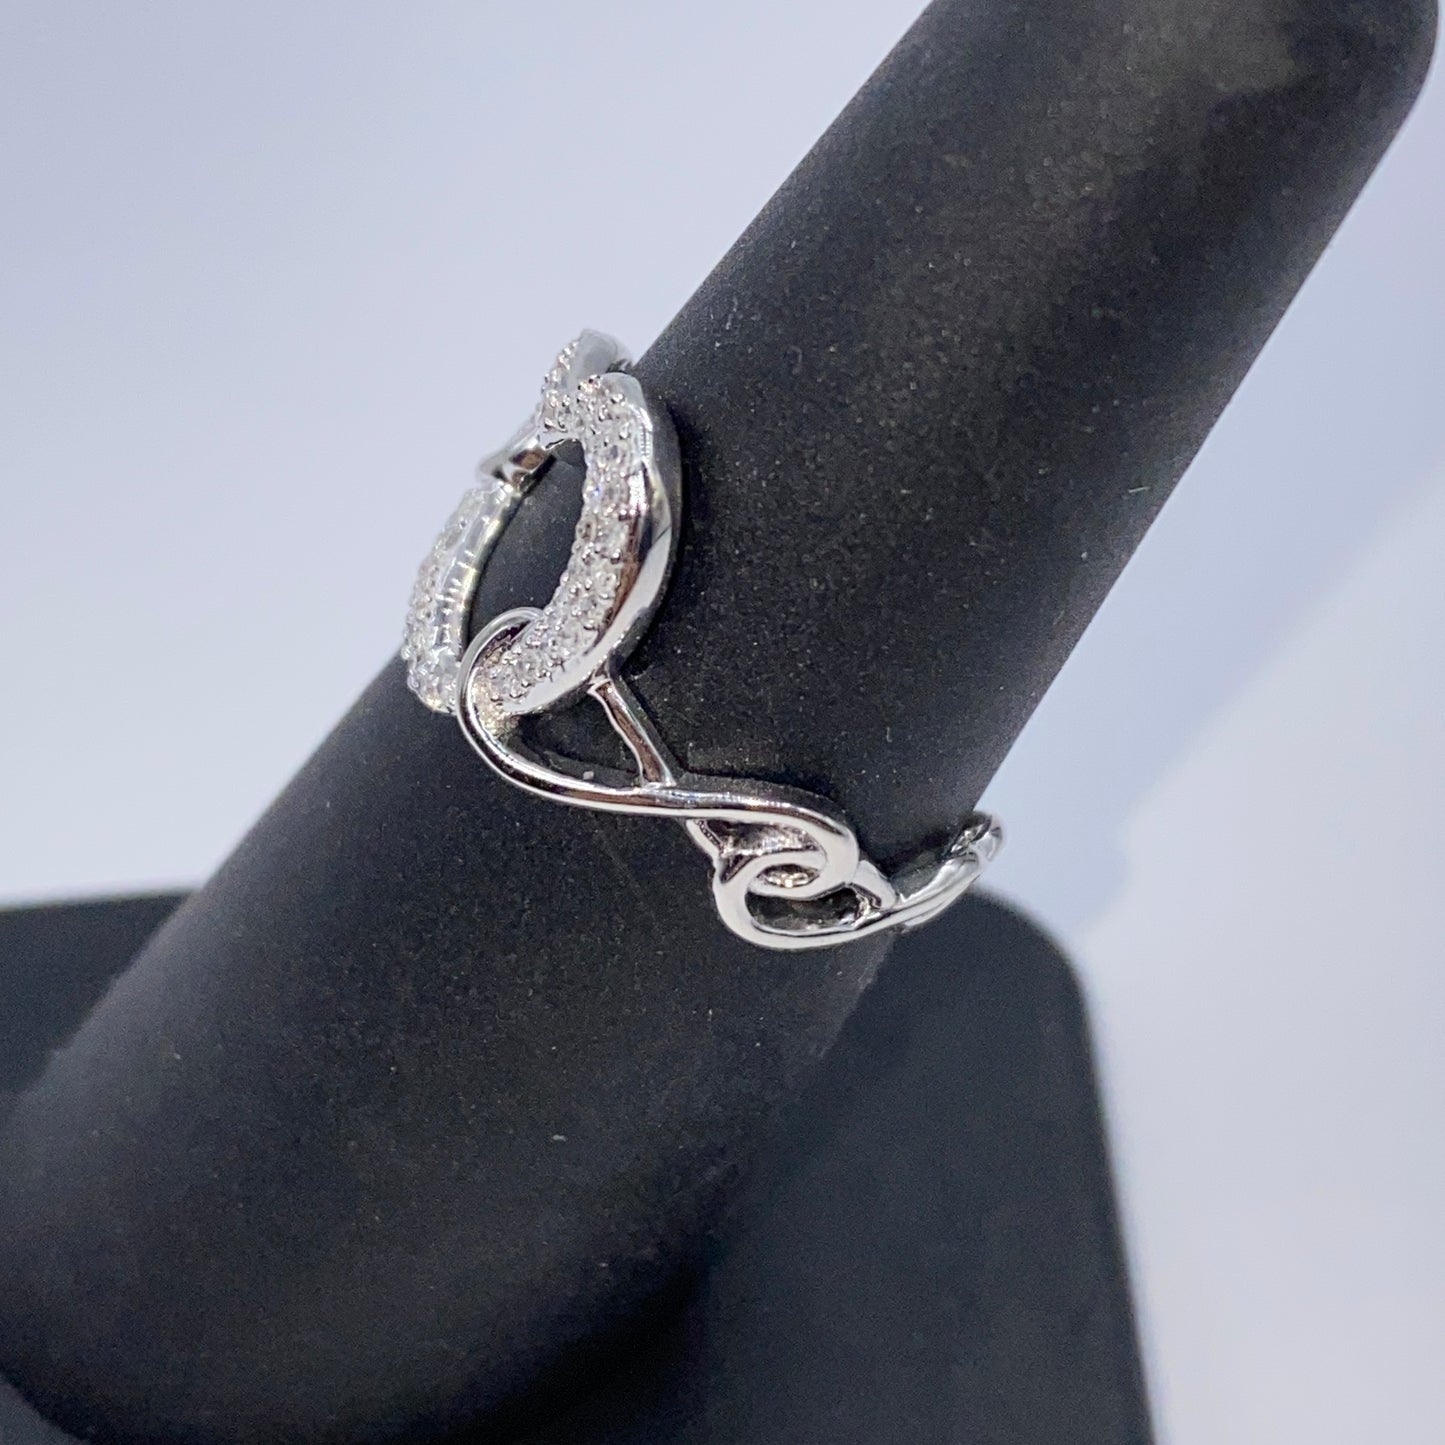 14K Heart Infinity Diamond Ring Adjustable Band